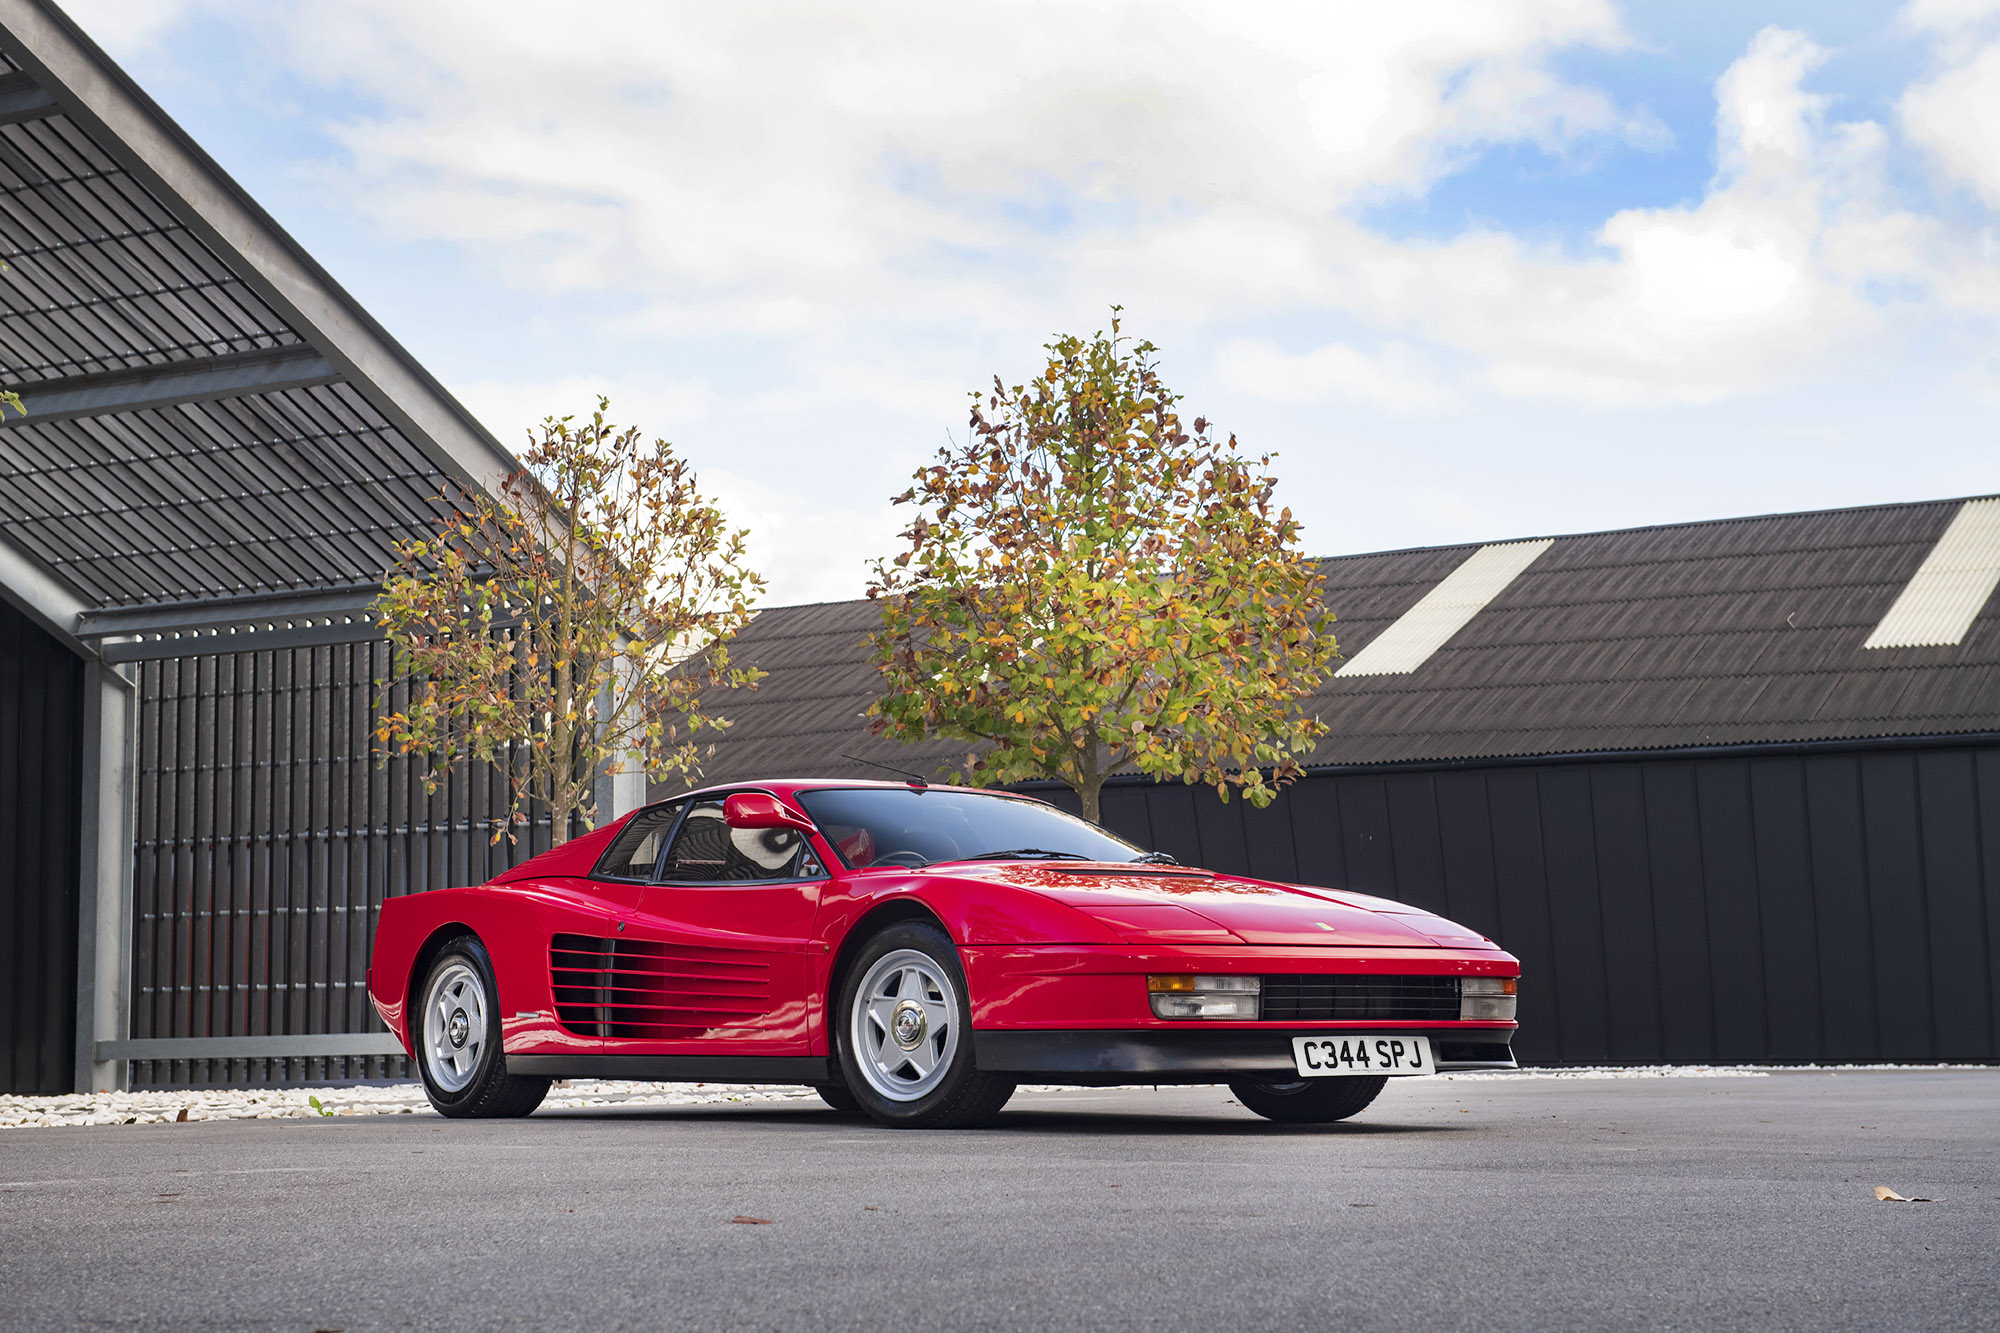 1986 Ferrari Testarossa - Single-Mirror, RHD, one Owner from new, only 24,000 miles - Duncan ...